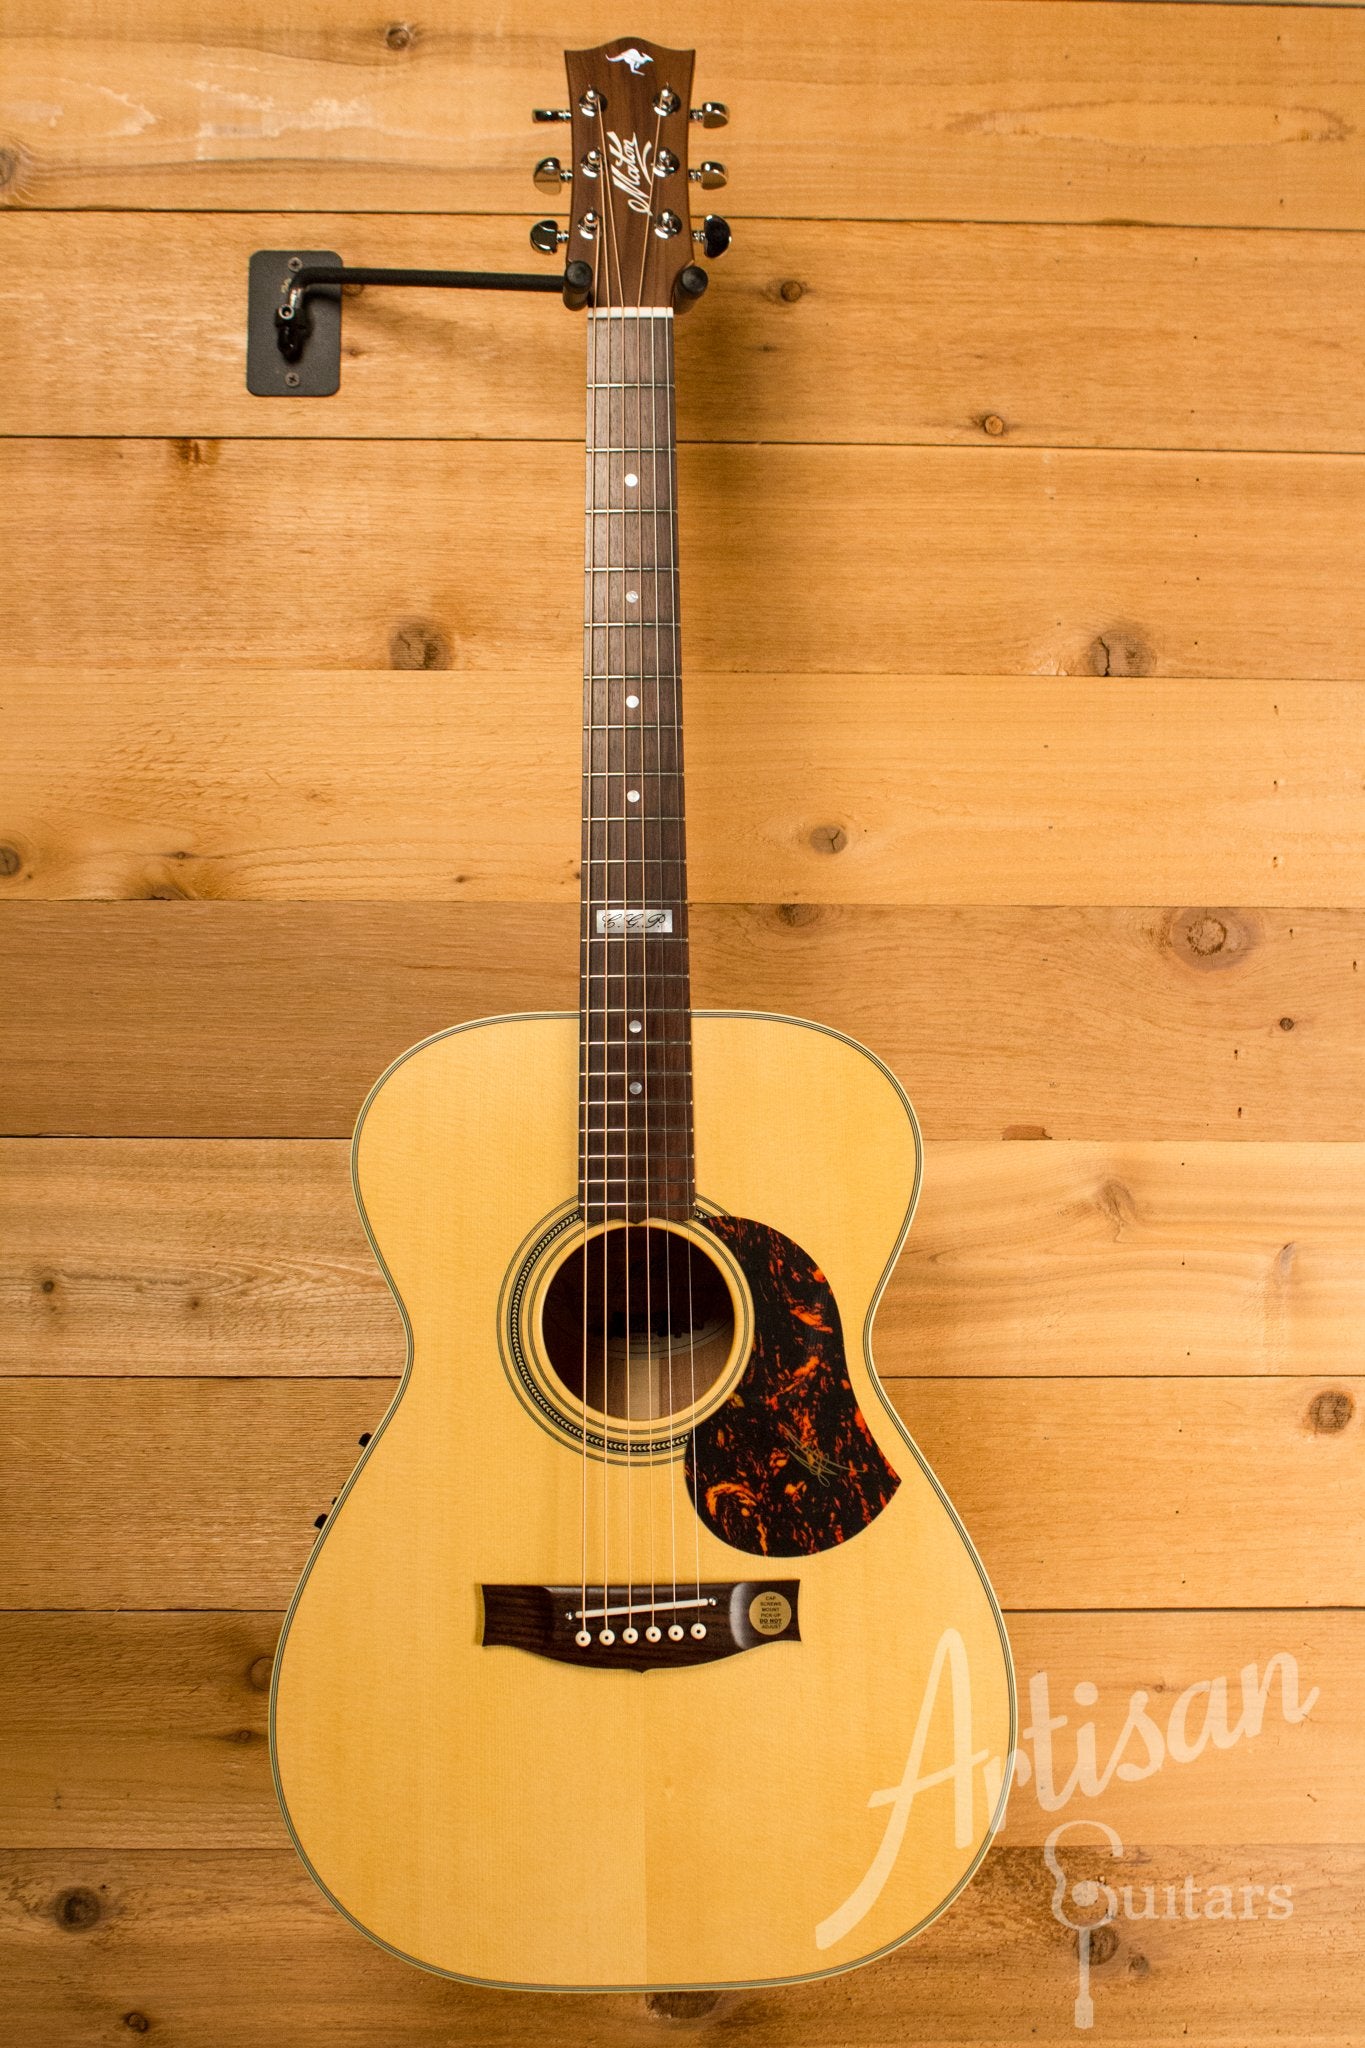 Maton EBG 808 TE Tommy Emmanuel Signature Guitar ID-10791 - Artisan Guitars